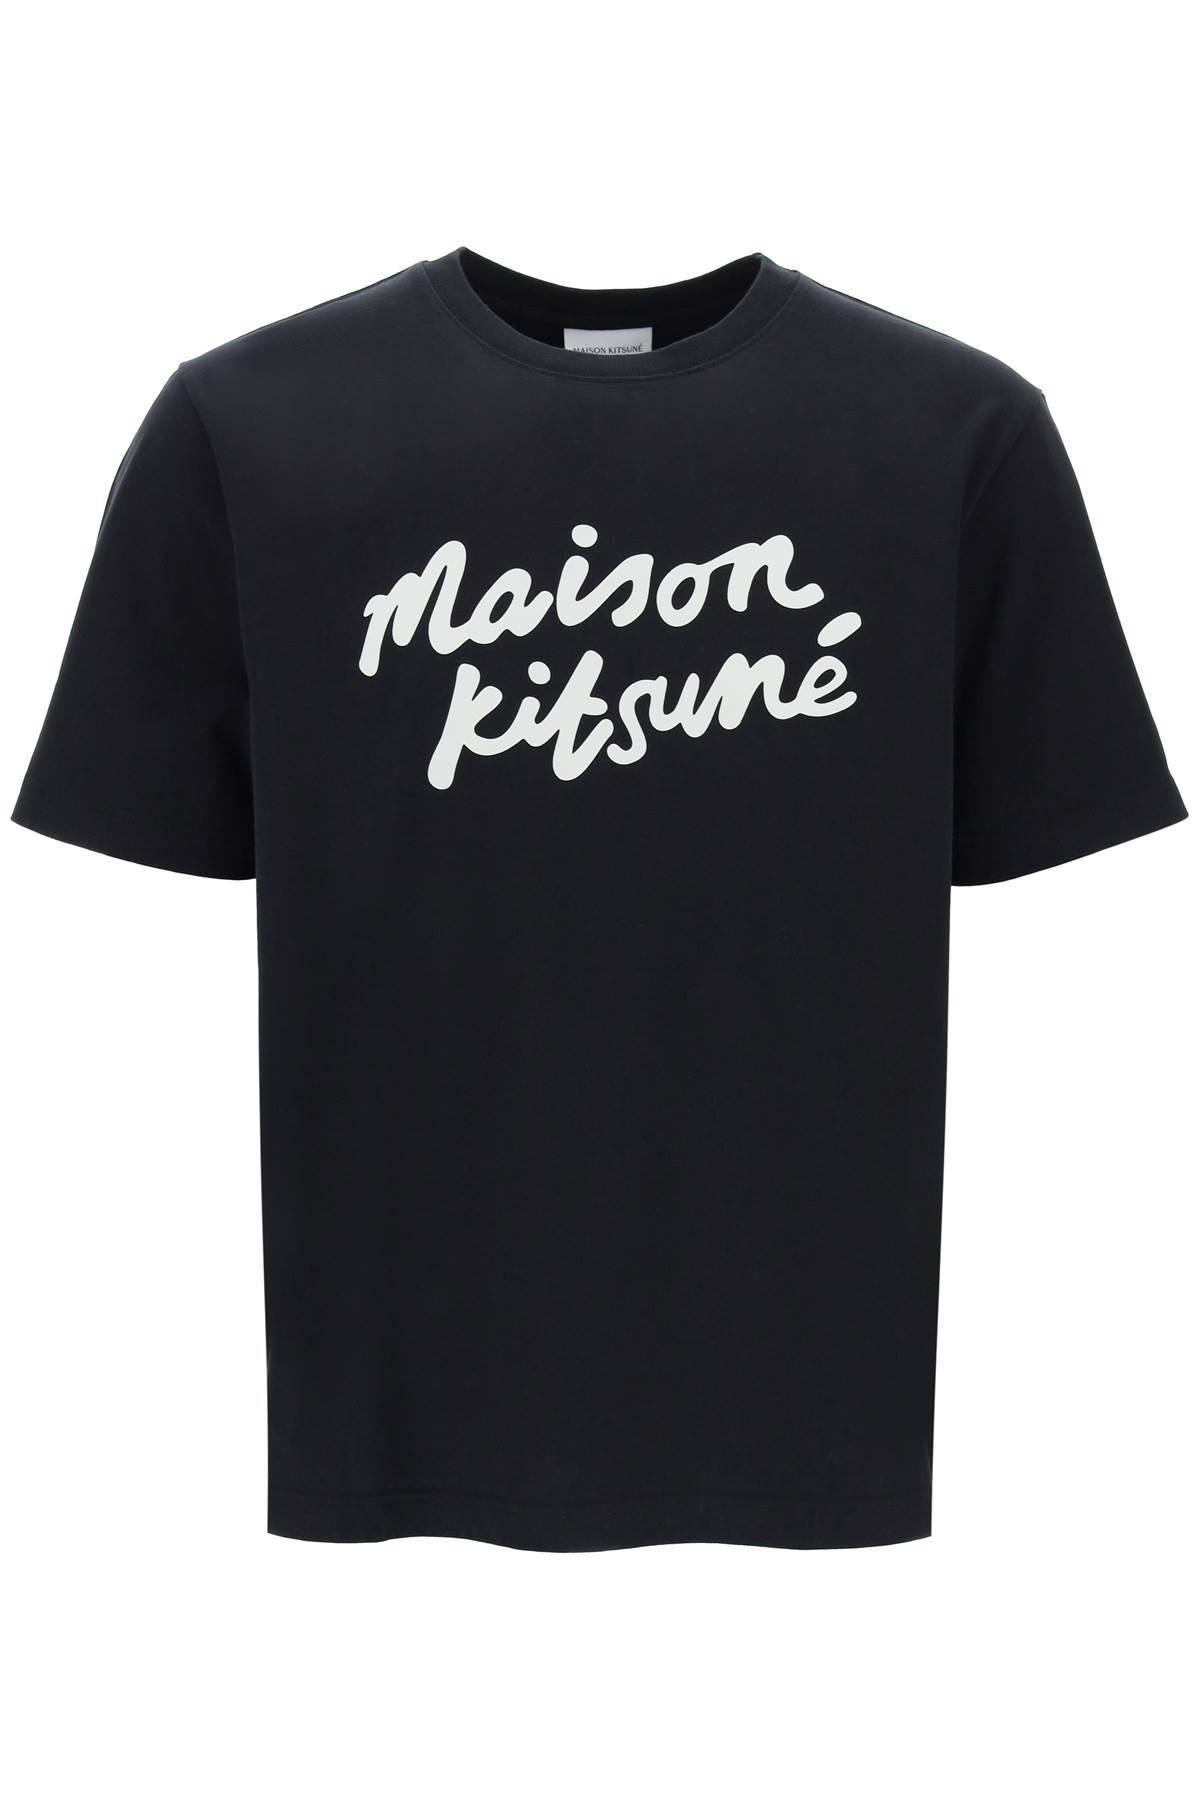 Maison Kitsuné MAISON KITSUNE t-shirt with logo in handwriting